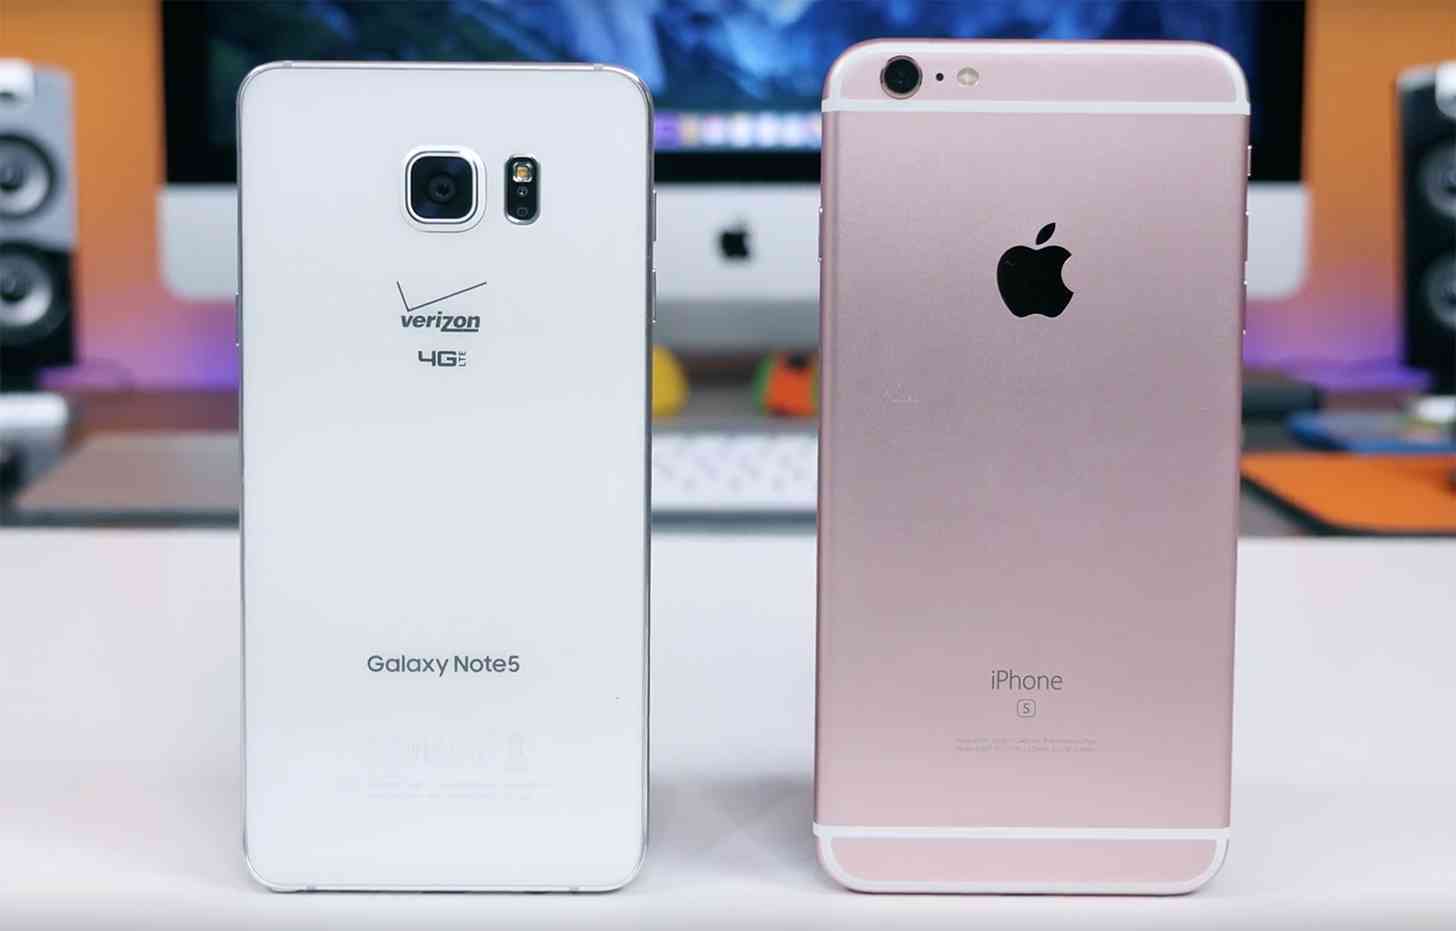 Samsung Galaxy Note 5, Apple iPhone 6s Plus comparison